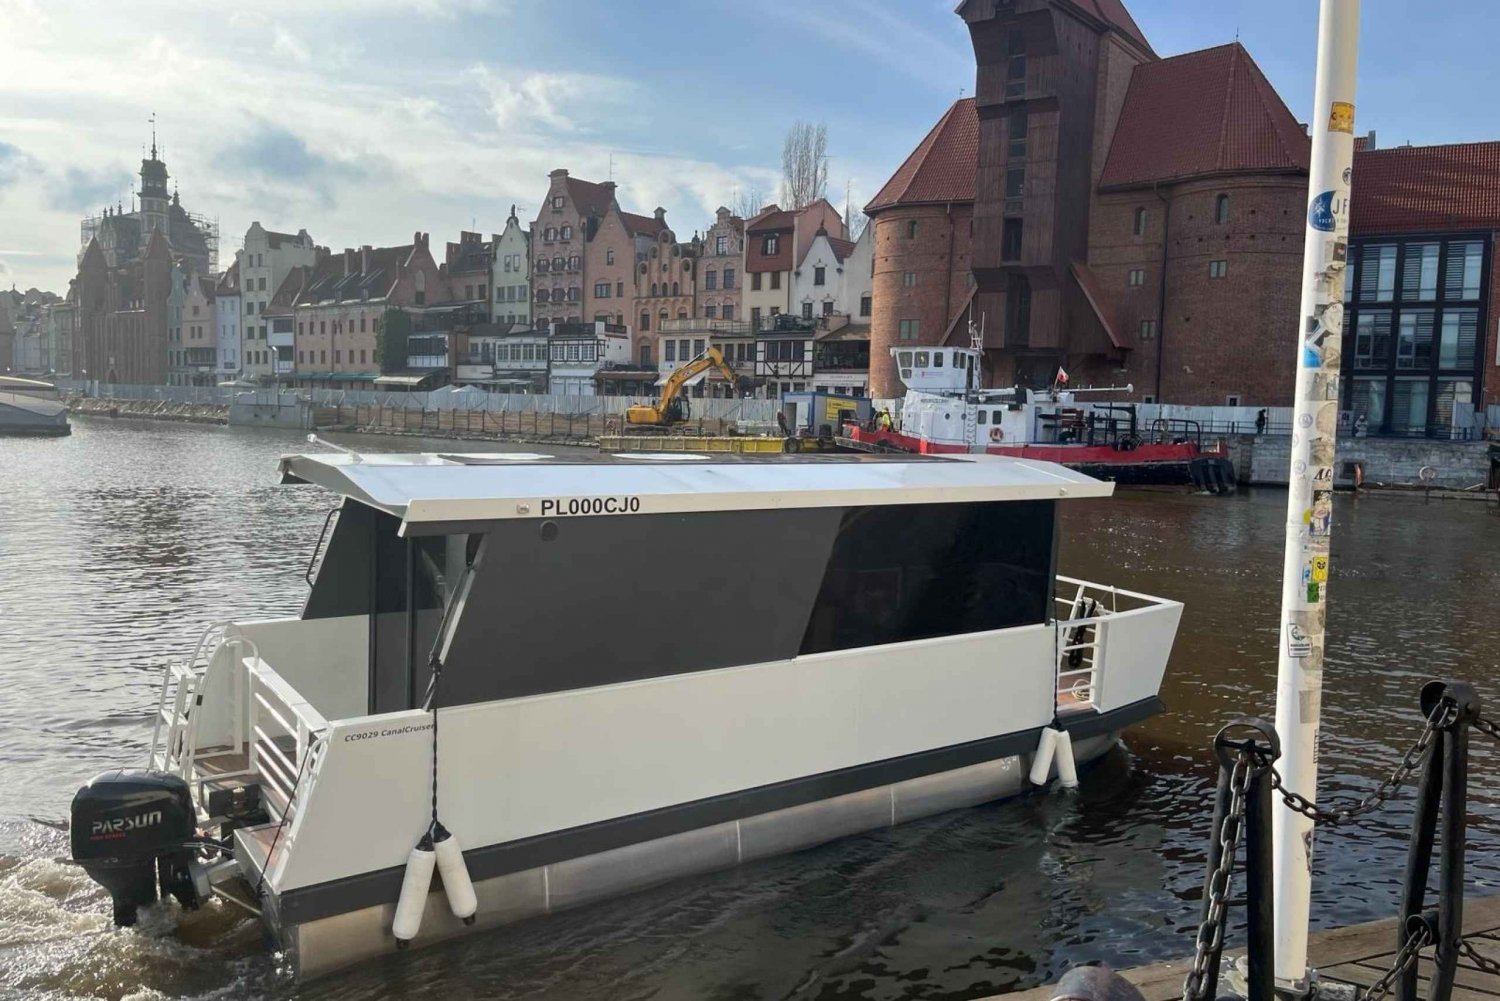 Flambant neuf - Tiny Party Boat - Houseboat by Motława in Gdańsk